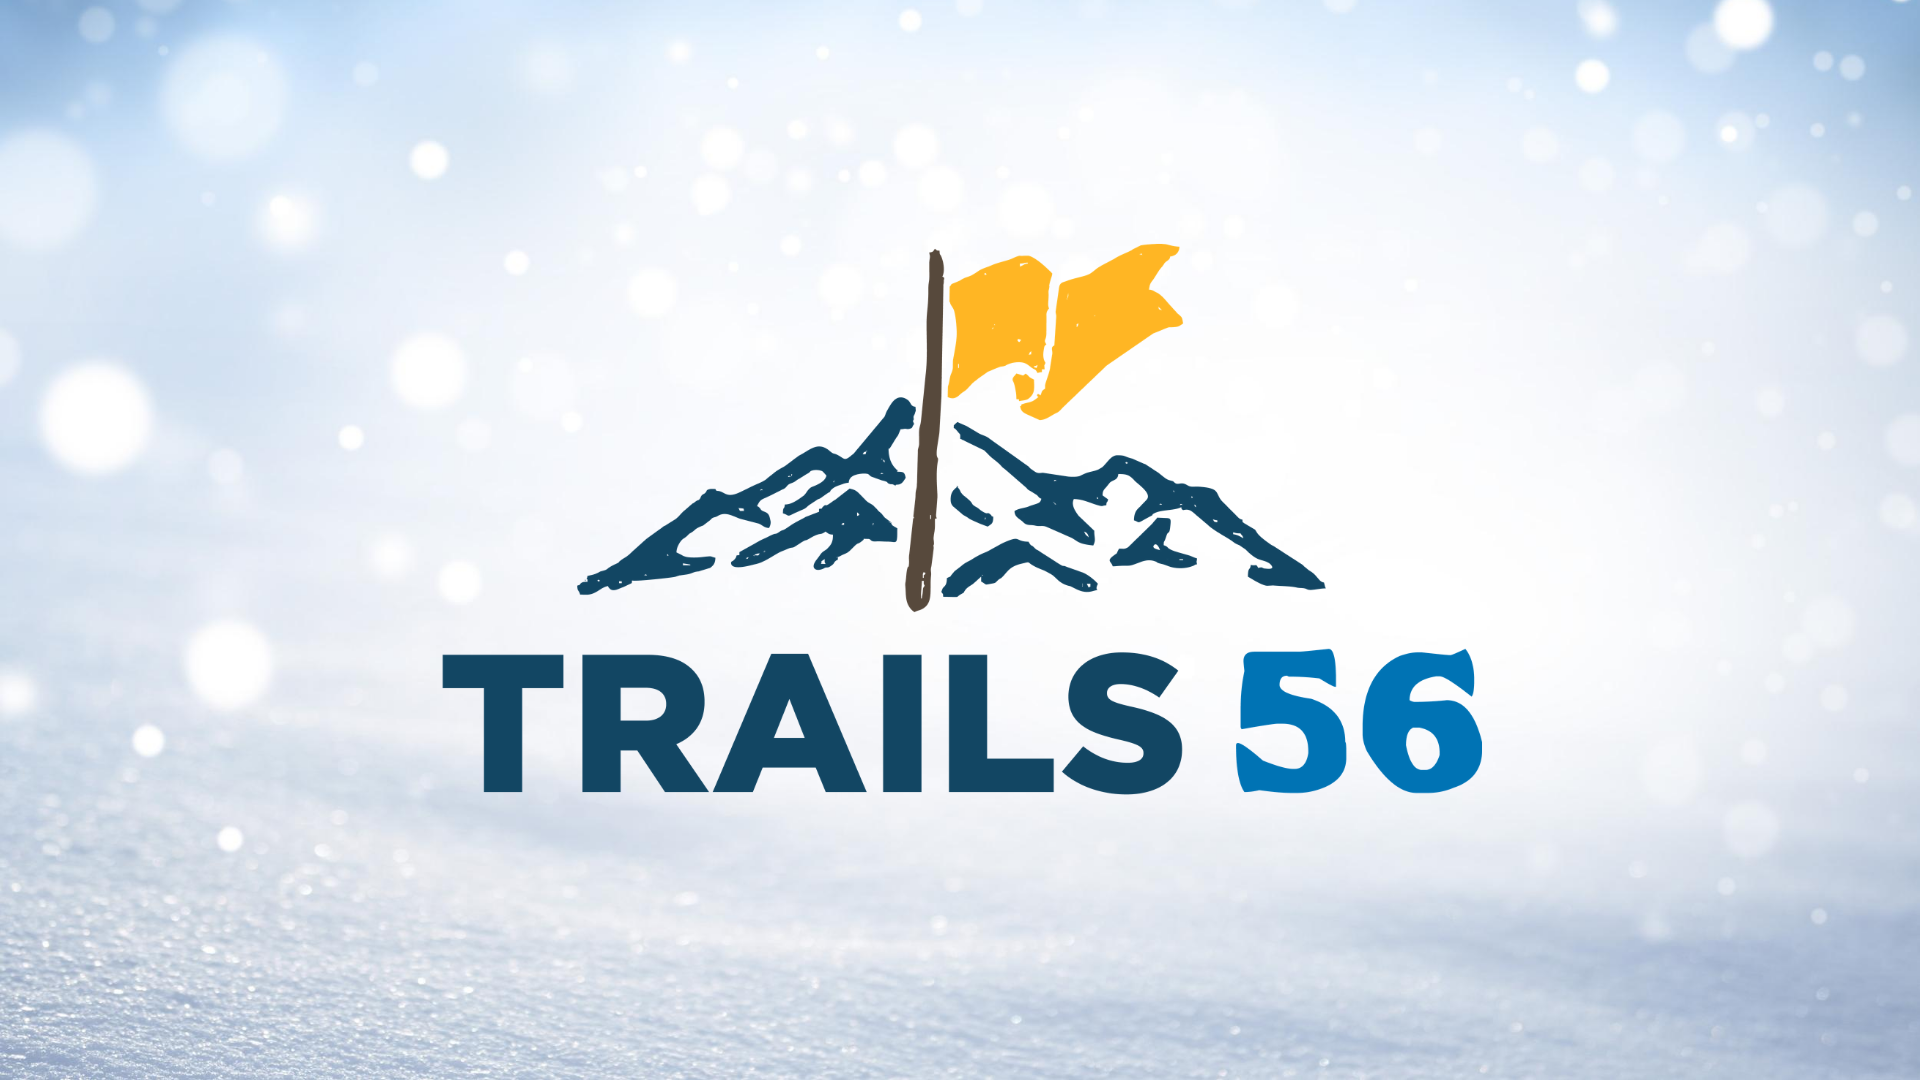 Trails 56 Winter 2020 image